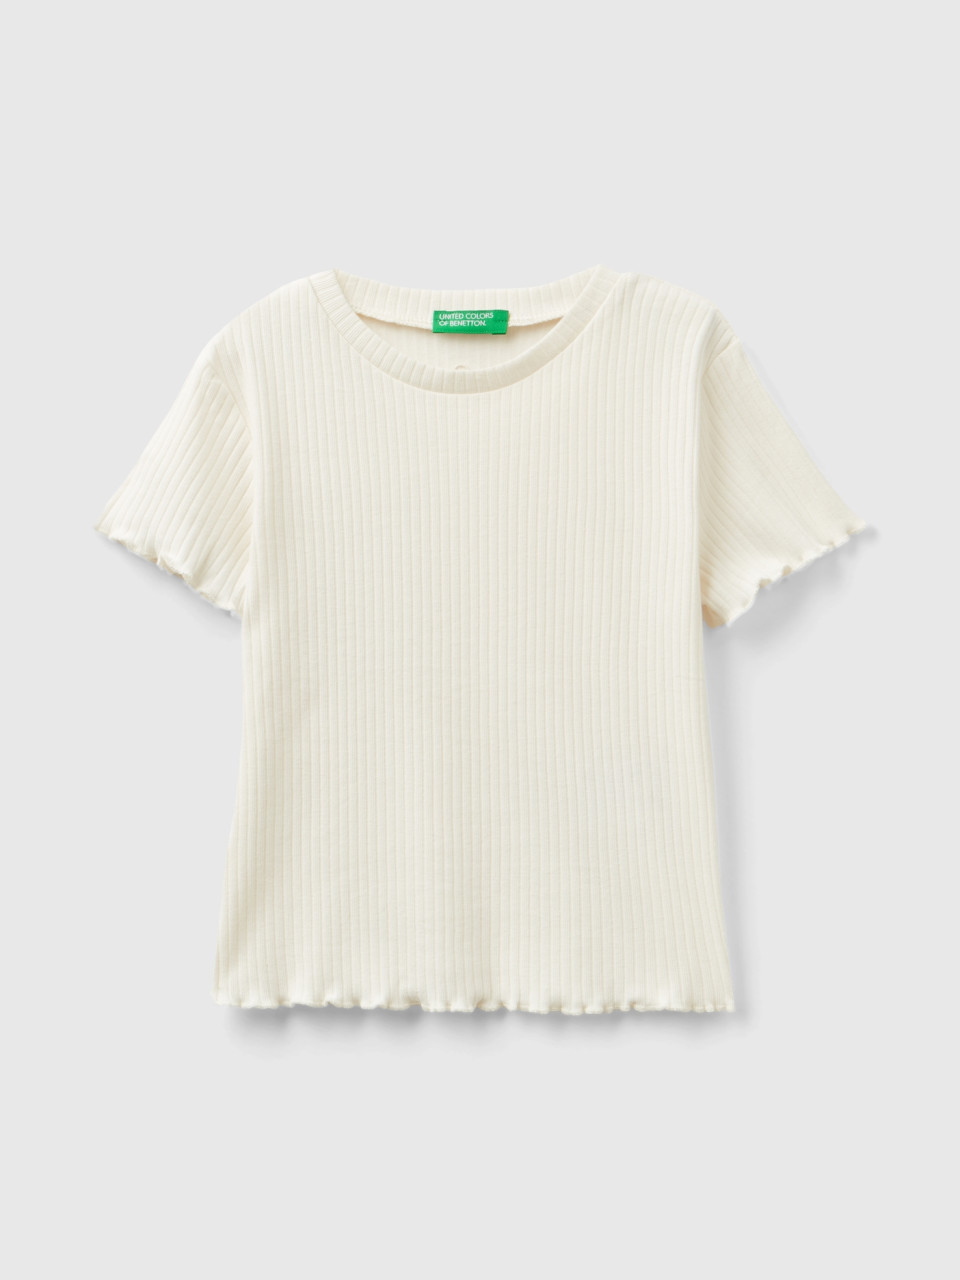 Benetton, Ribbed Short Sleeve T-shirt, Creamy White, Kids